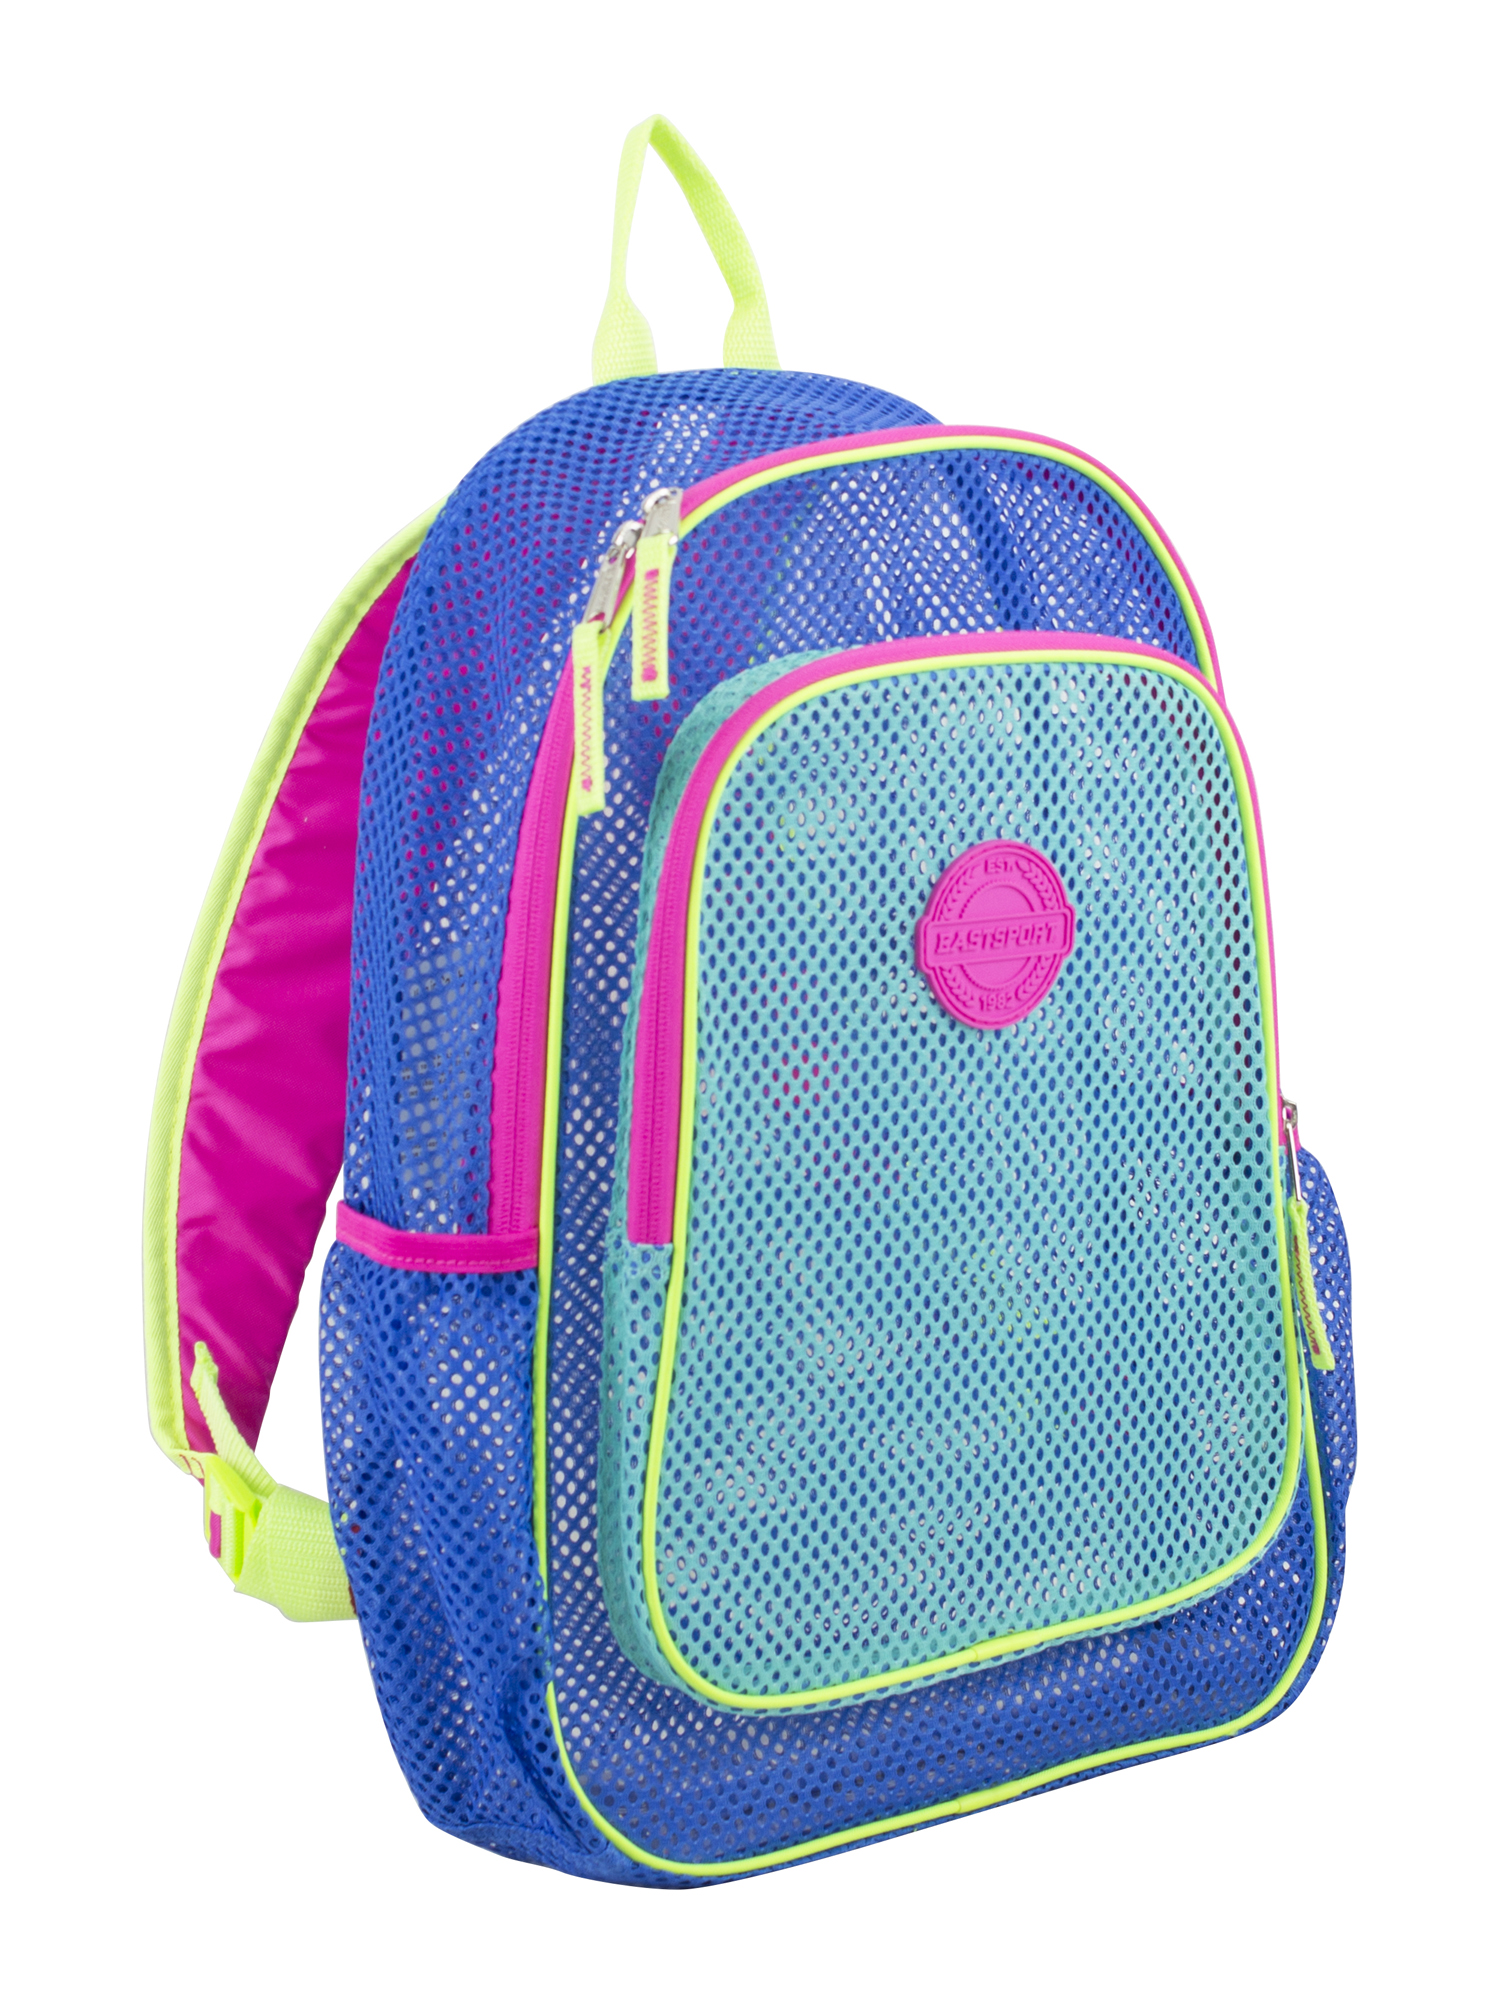 Eastsport Multi-Purpose Mesh Dynamic Blue Backpack with Adjustable Straps - image 1 of 6